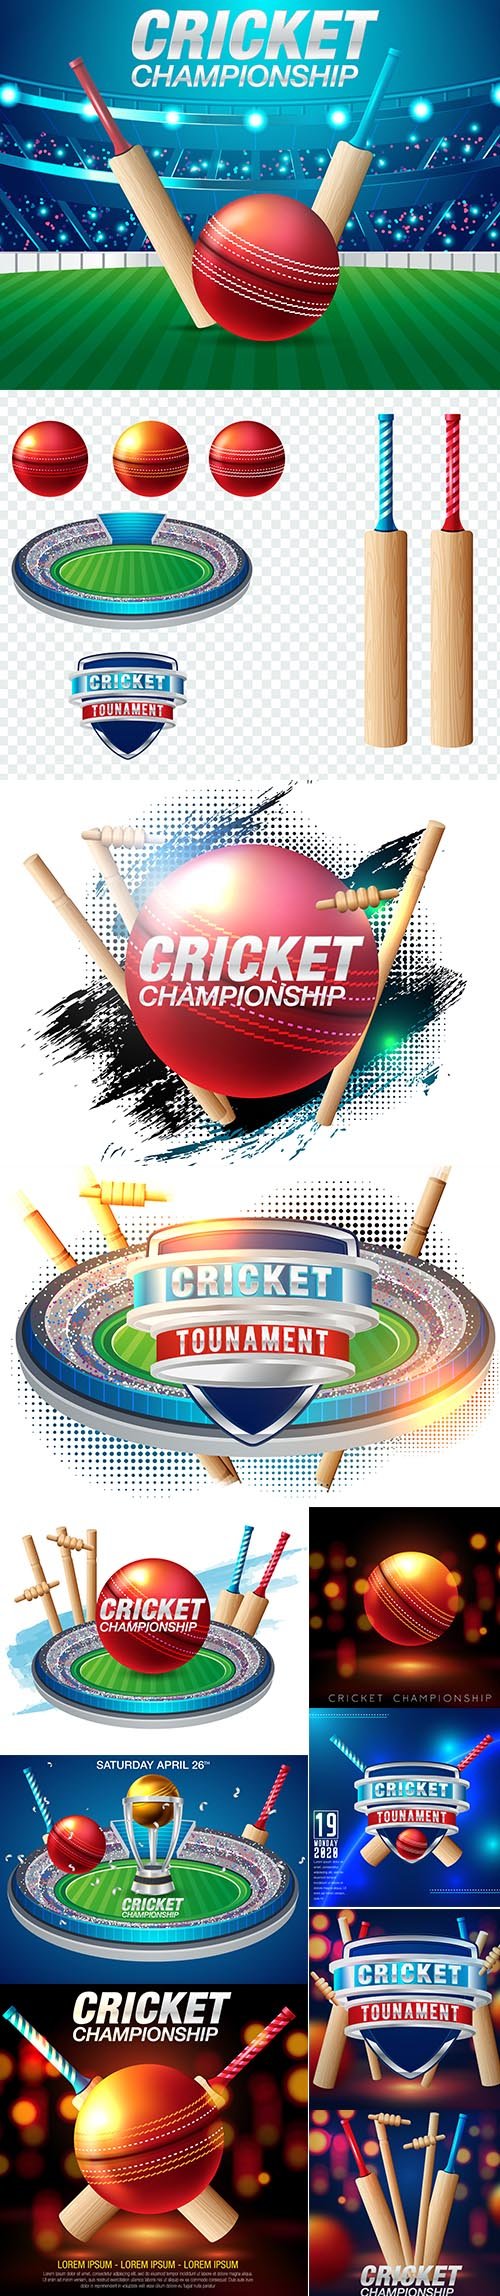 Set of Realistic Cricket Equipment Illustrations